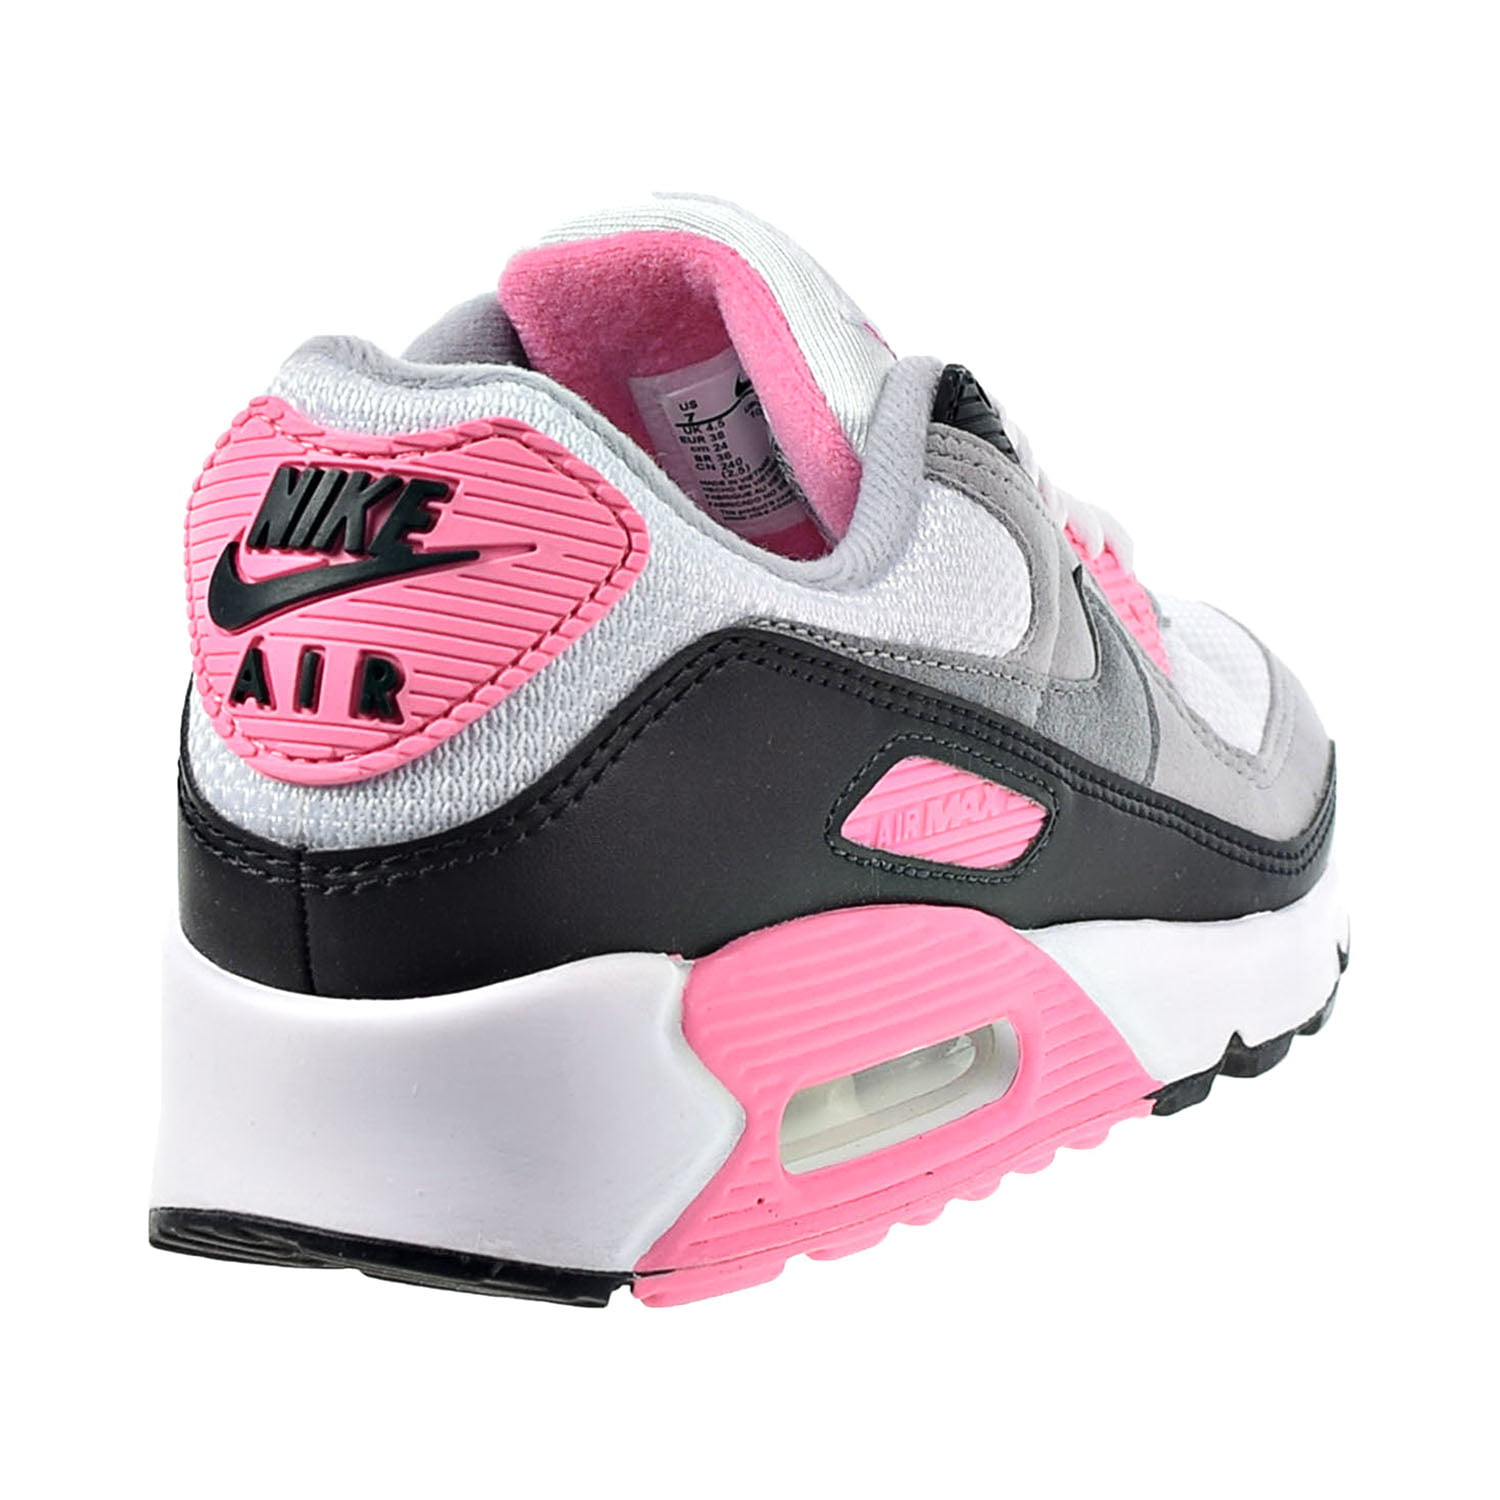 Nike Air Max 90 Women's Shoes White-Particle Grey-Rose Pink-Black cd0490-102 Walmart.com